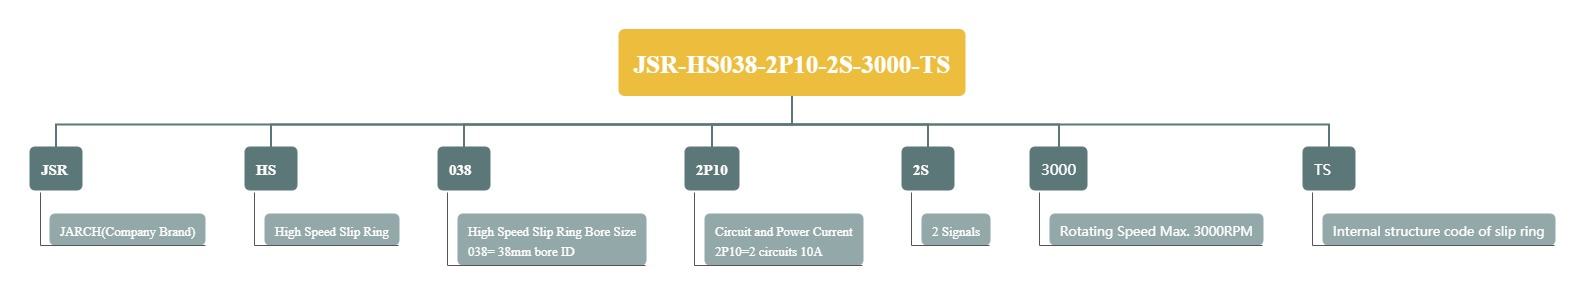 JSR-HS038-2P10-2S-3000-TS.jpg